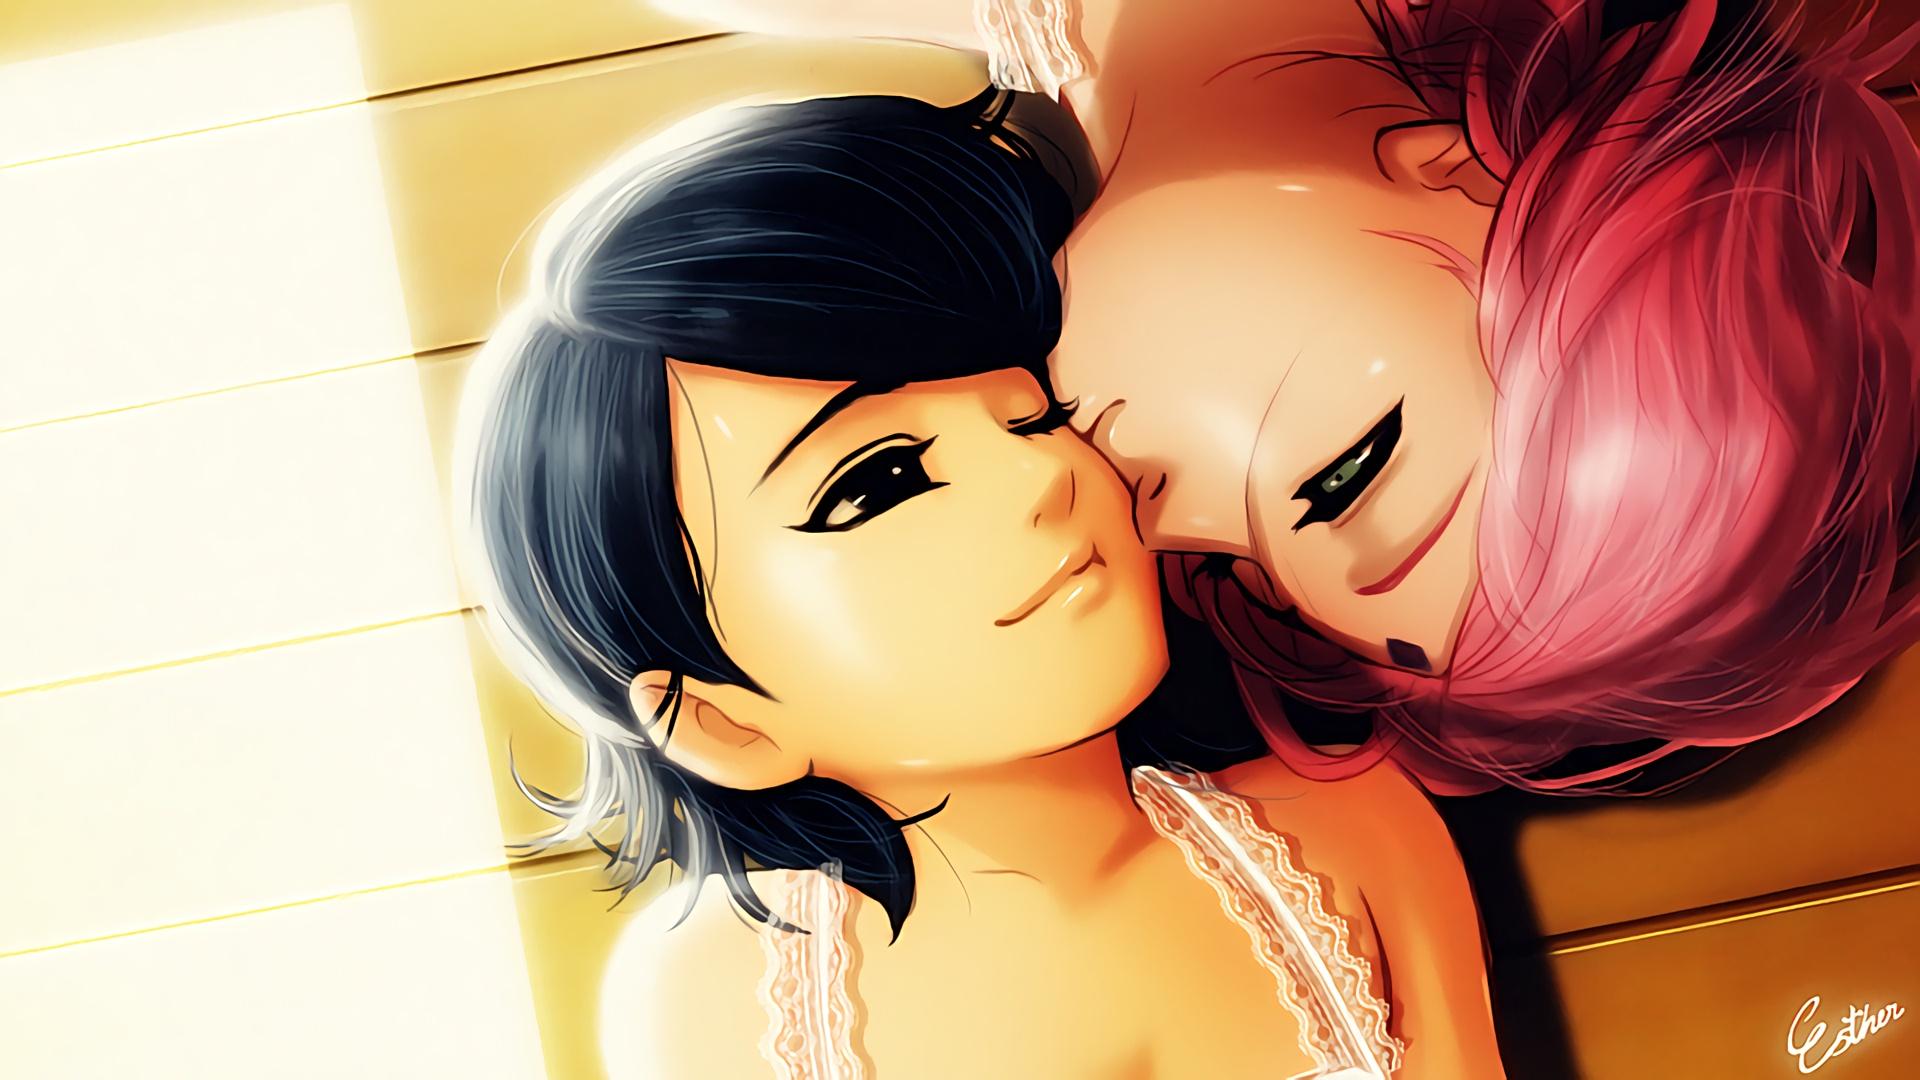 Kiss Anime Girls Wallpaper in jpg format for free download